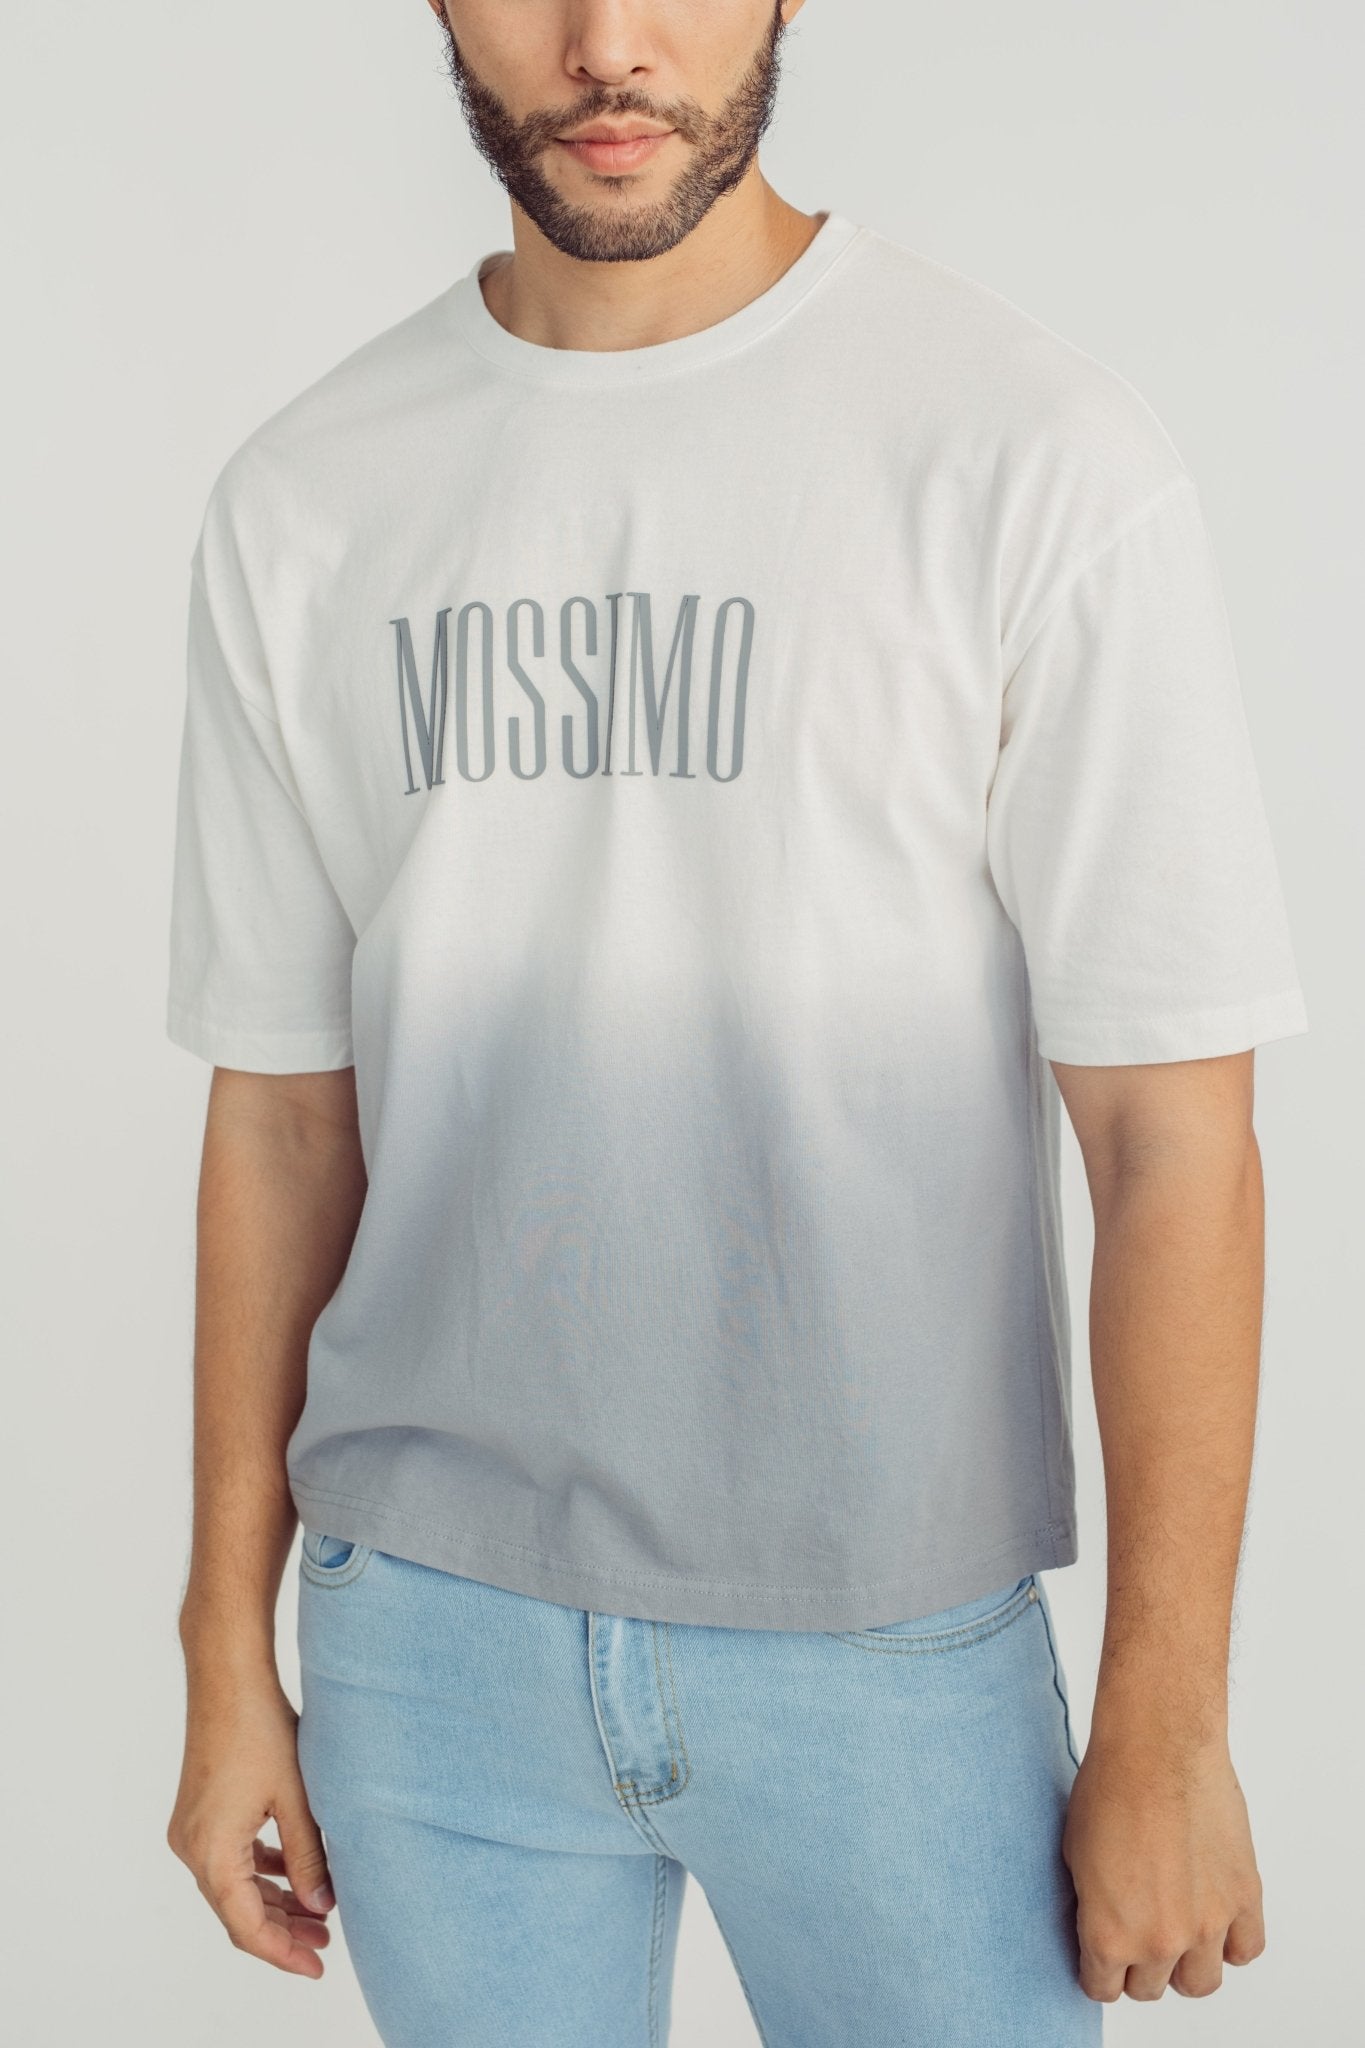 Ivan Gray Fashion Round Neck Shirt with High Density Print